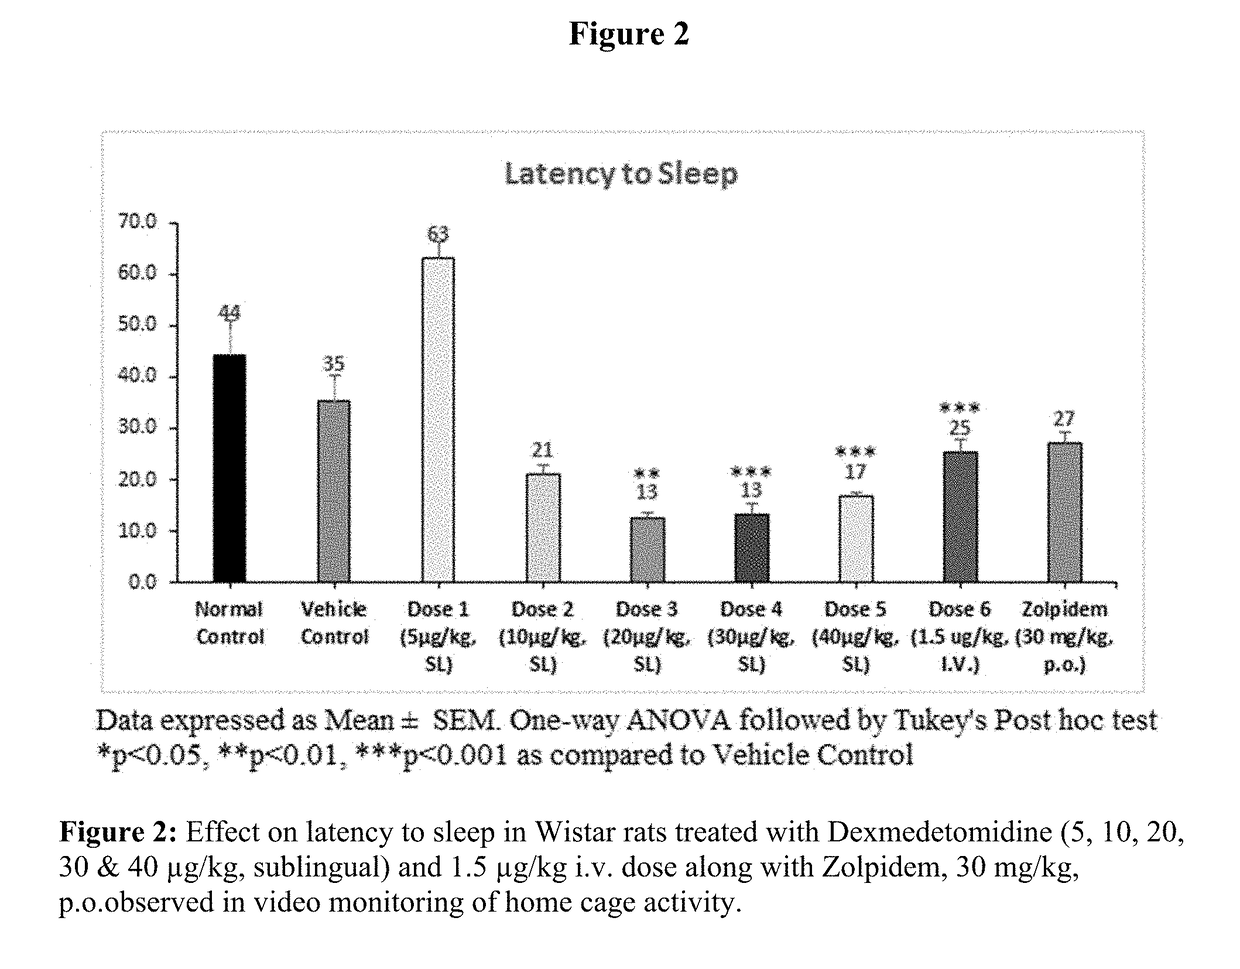 Prevention or treatment of sleep disorders using dexmedetomidine formulation